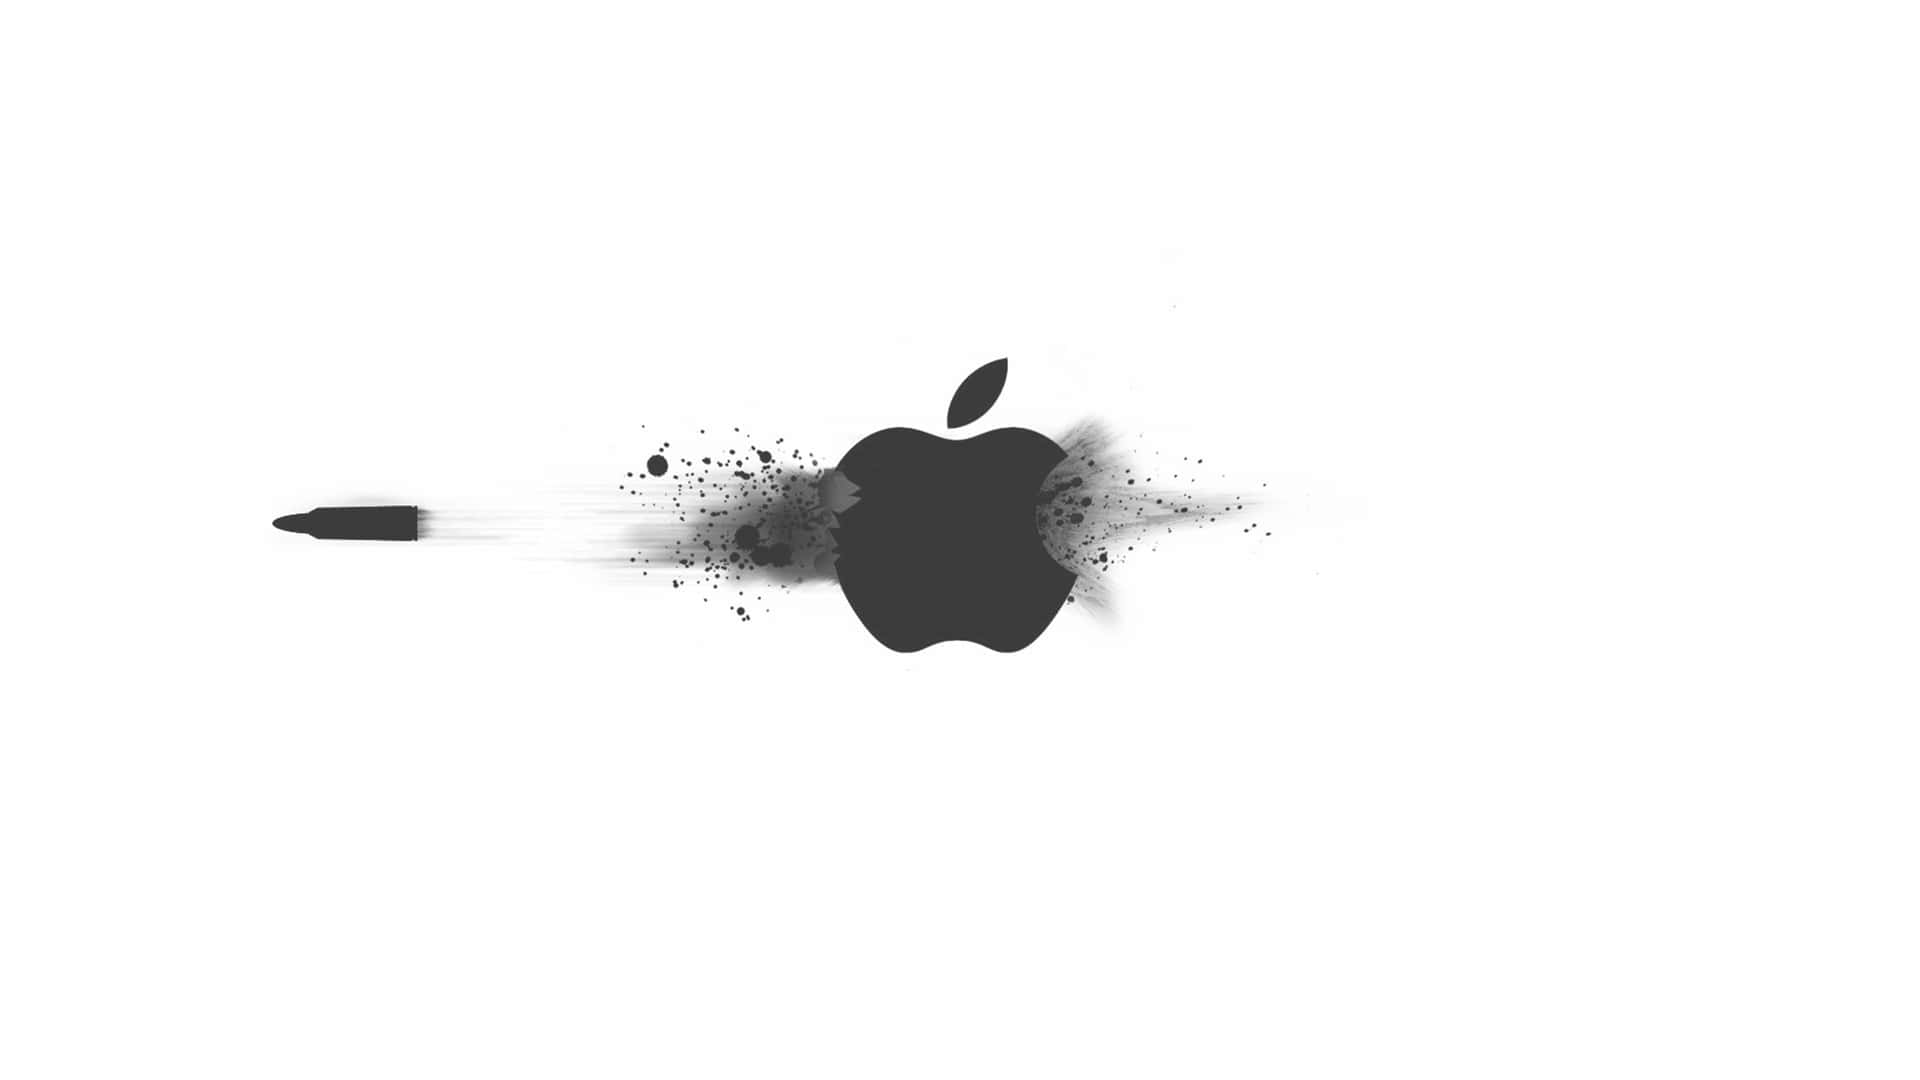 Abstract Apple Logo Explosion4 K B W Wallpaper